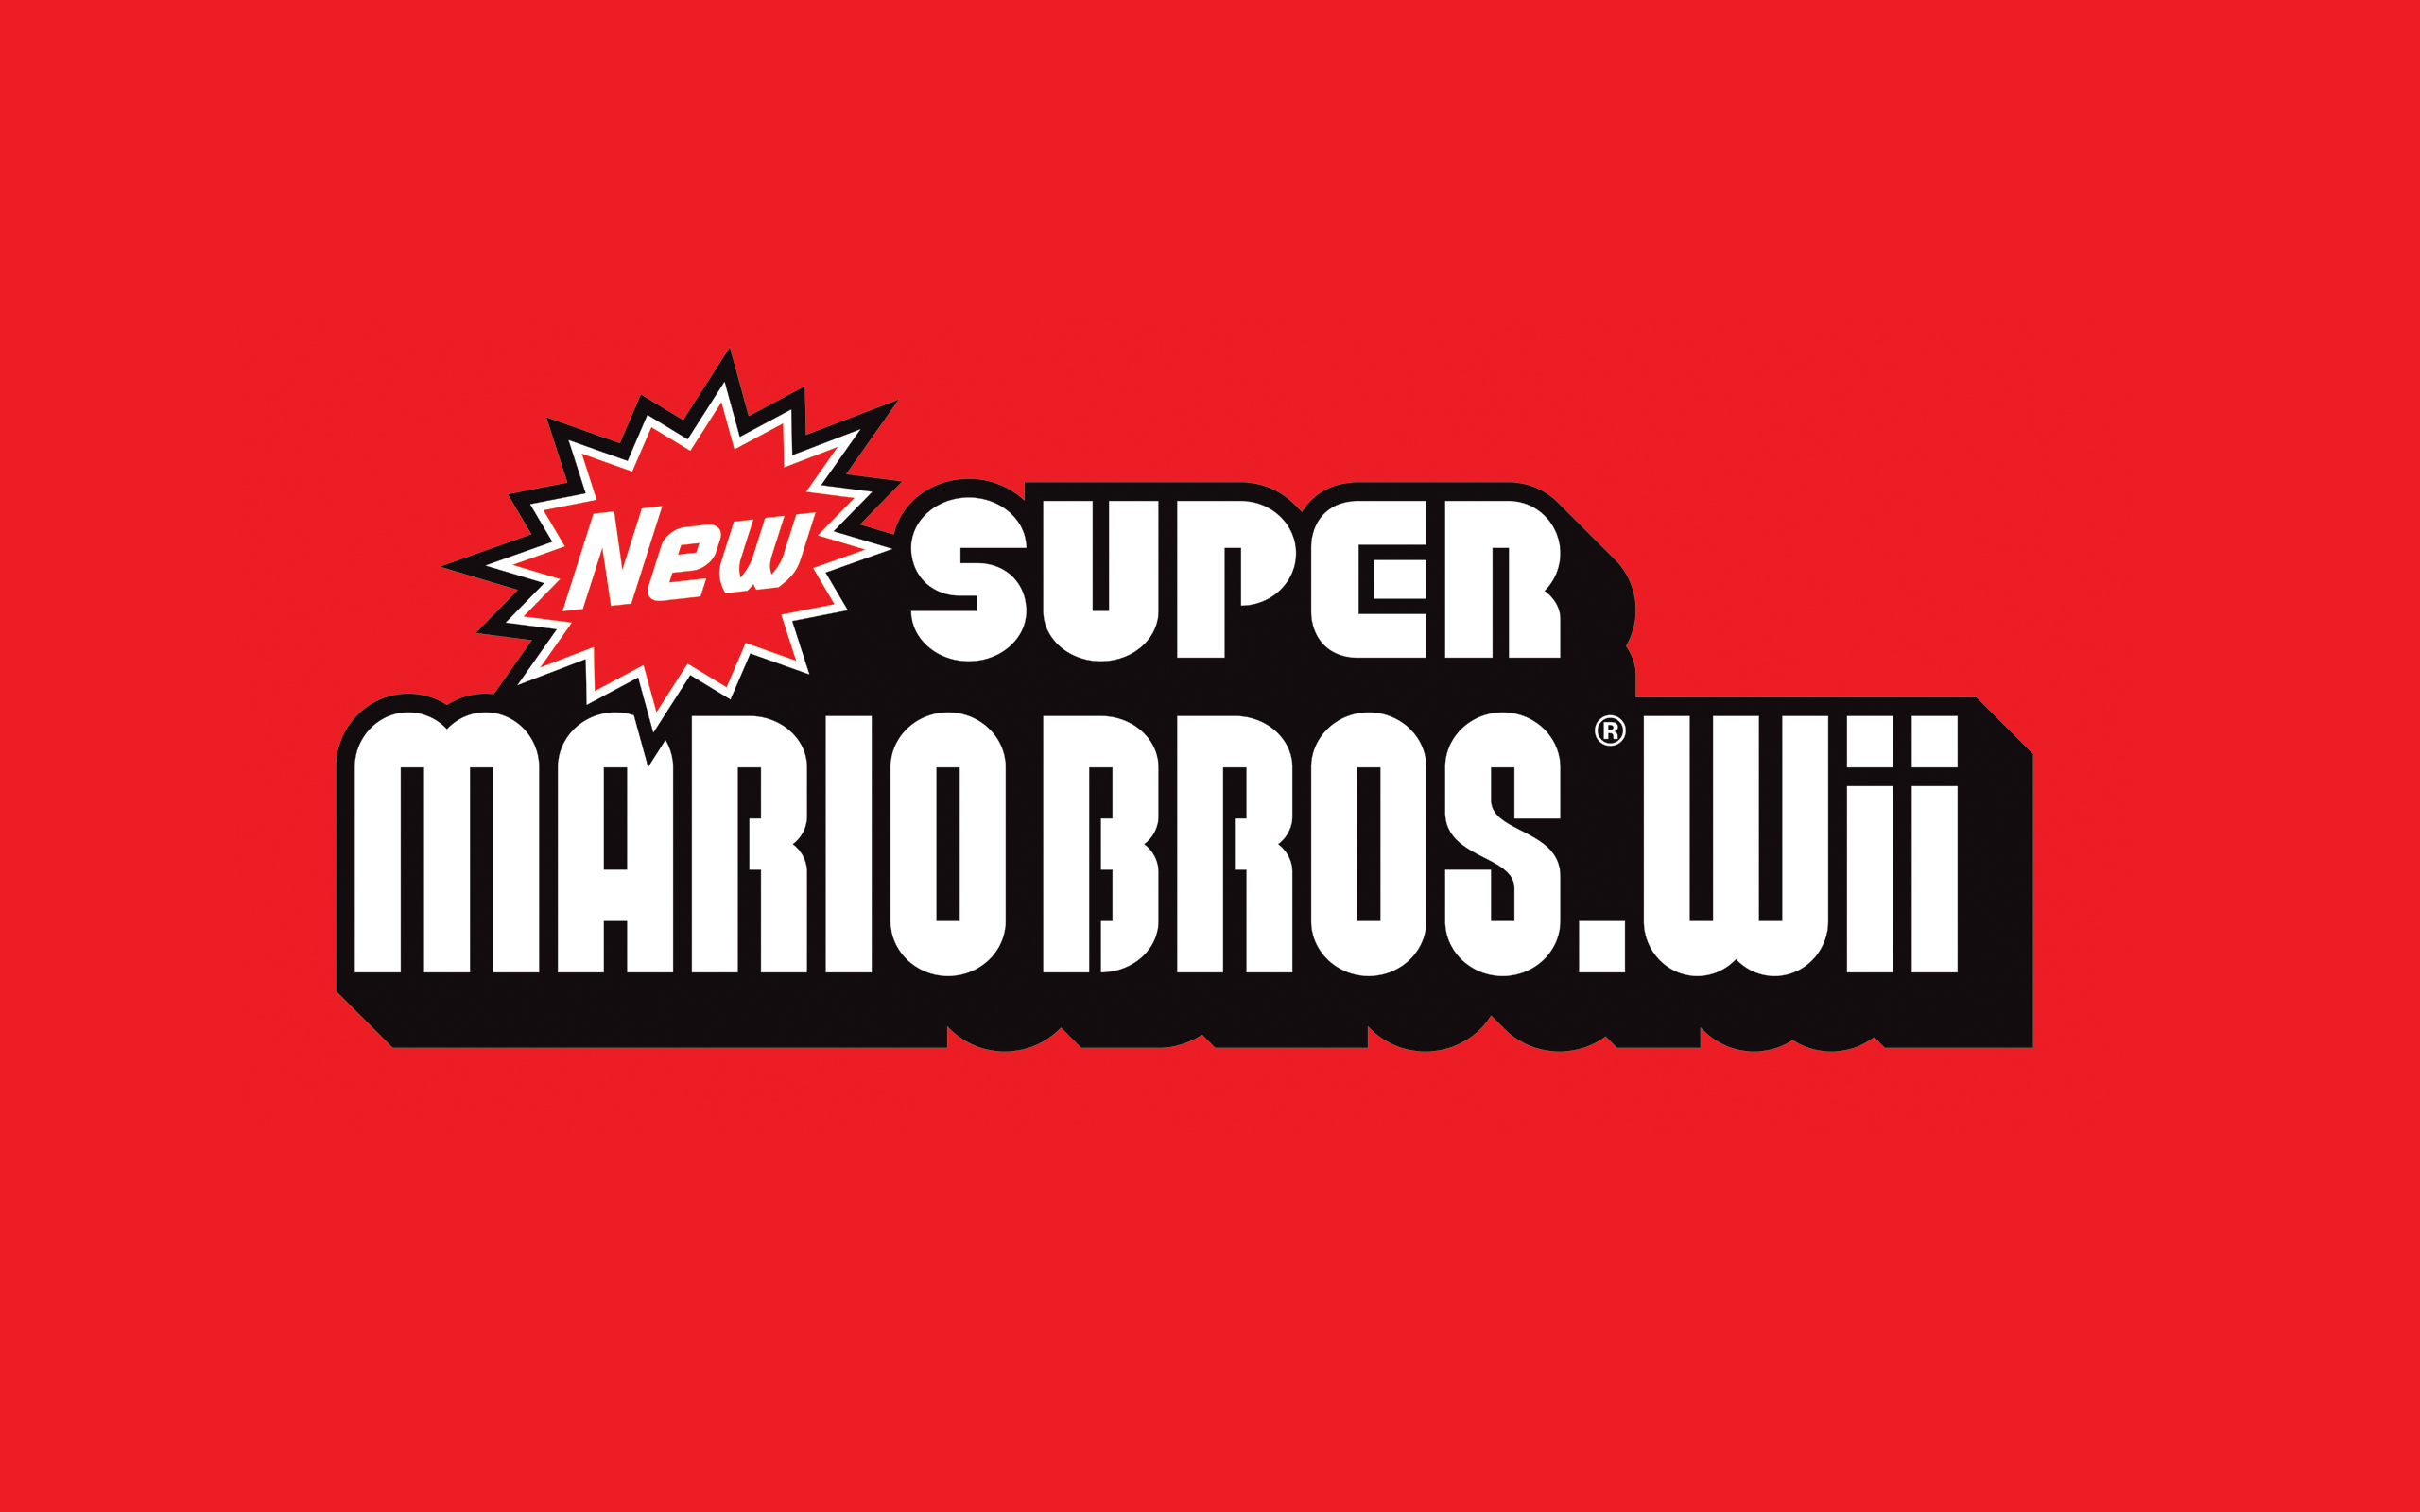 Super new песня. Супер новинка. Super Mario Bros logo. Wii Wallpaper. Bros show games.